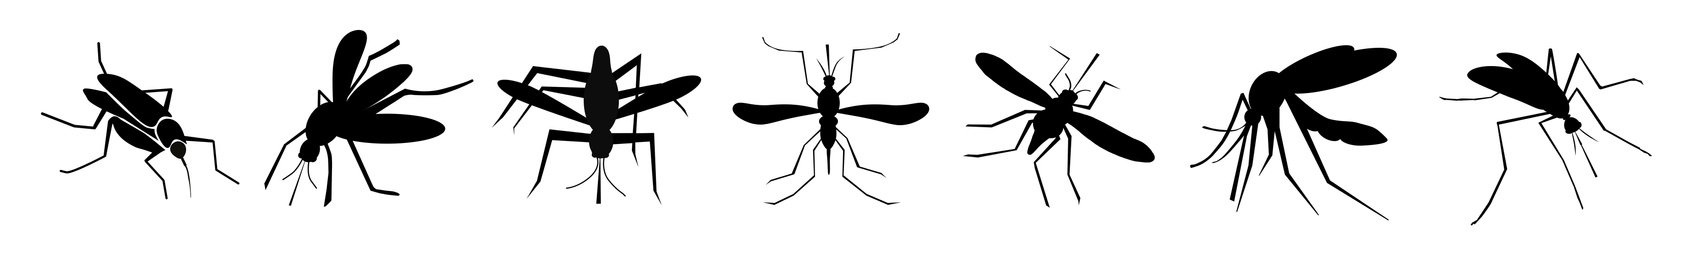 Set of black mosquitoes on white background, banner design. Illustration